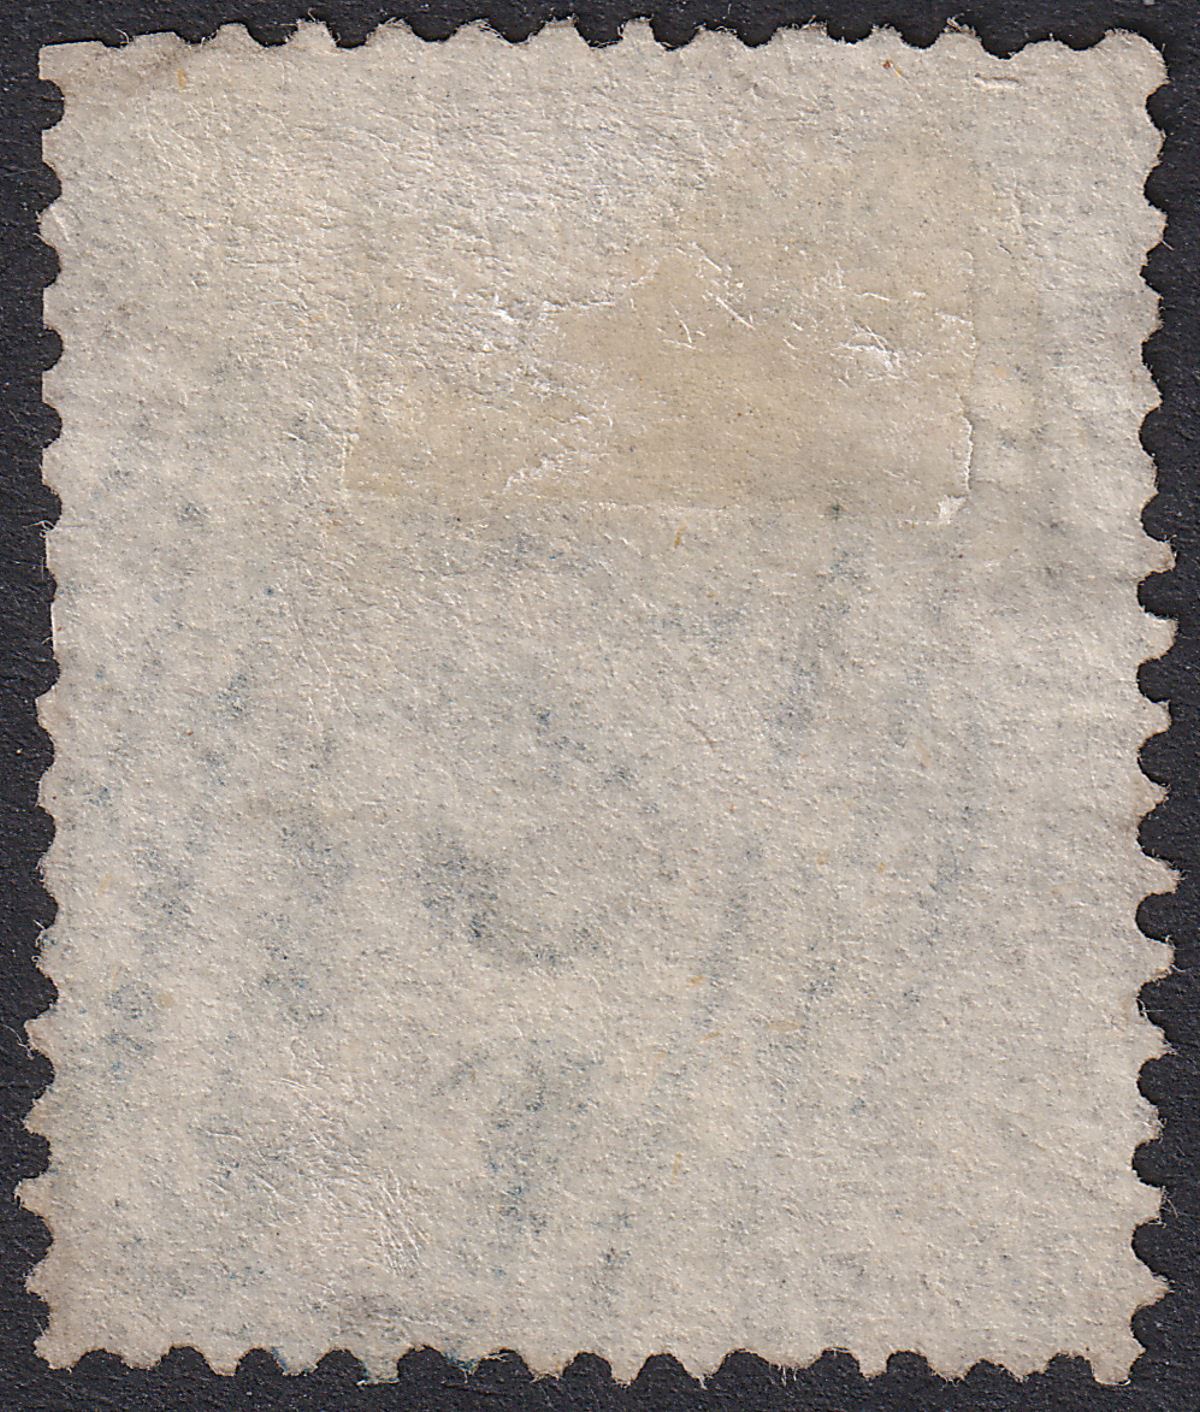 Hong Kong 1862 QV 96c Brownish Grey Used SG7 cat £450 with blue B62 postmark